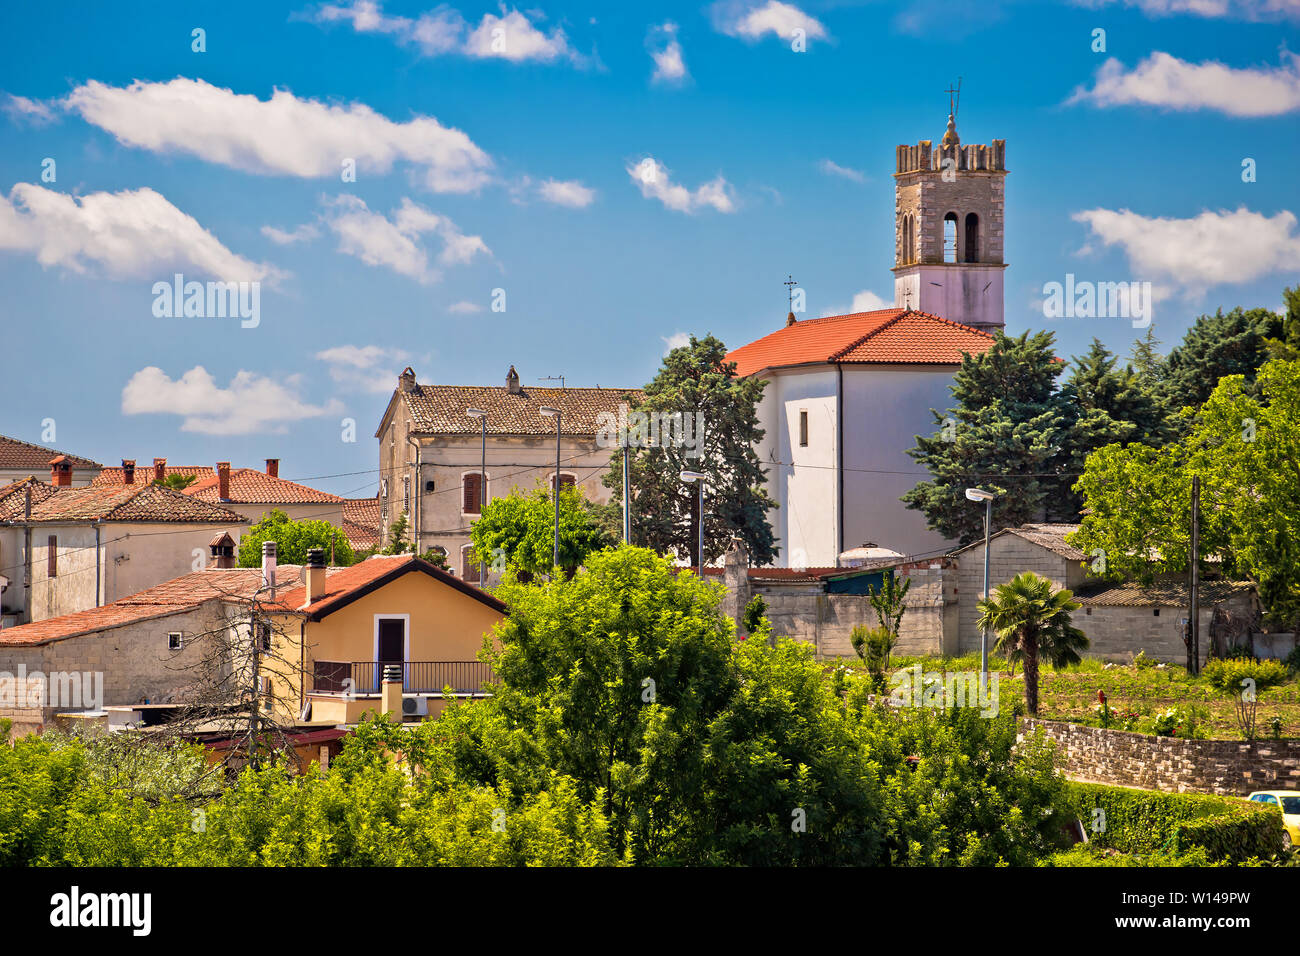 Malerische Stone Village in Nova Vas, Istrien Kroatien Stockfotografie -  Alamy